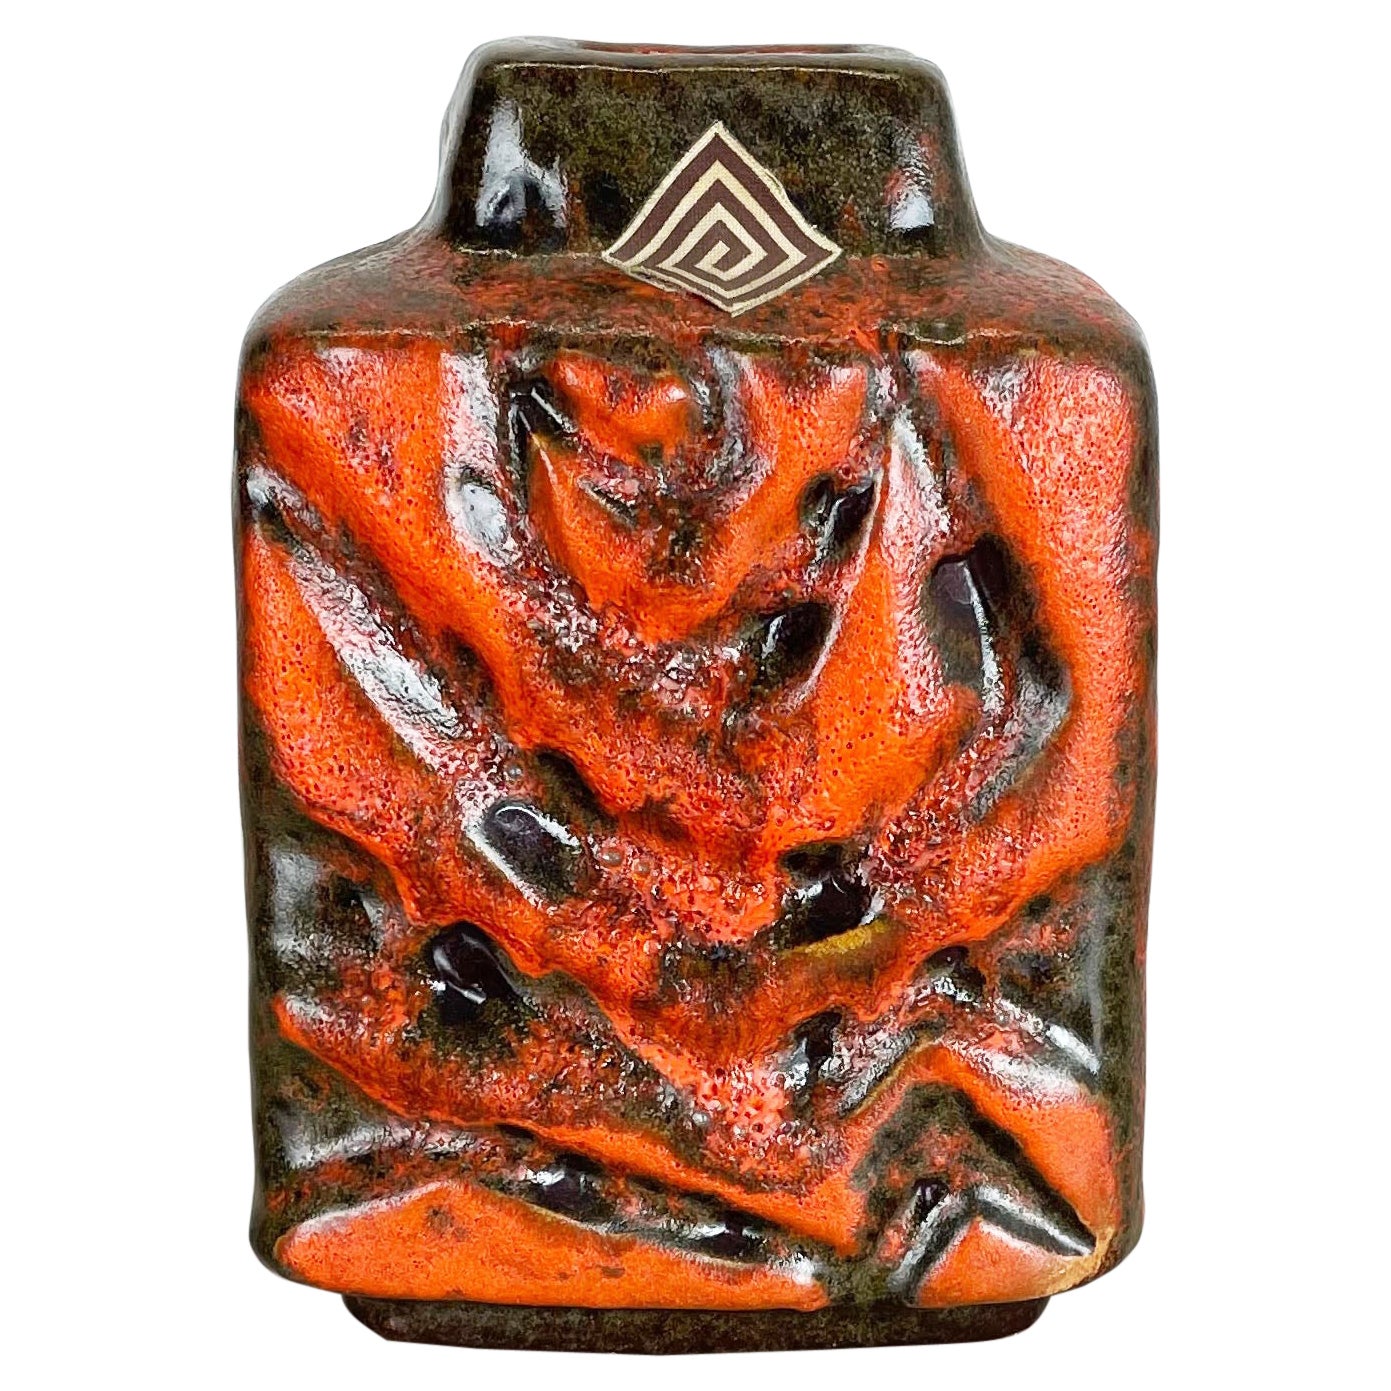 Super-Glasur WGP Fett Lava Keramik Vase Carstens Tnnieshof Deutschland, 1970er Jahre